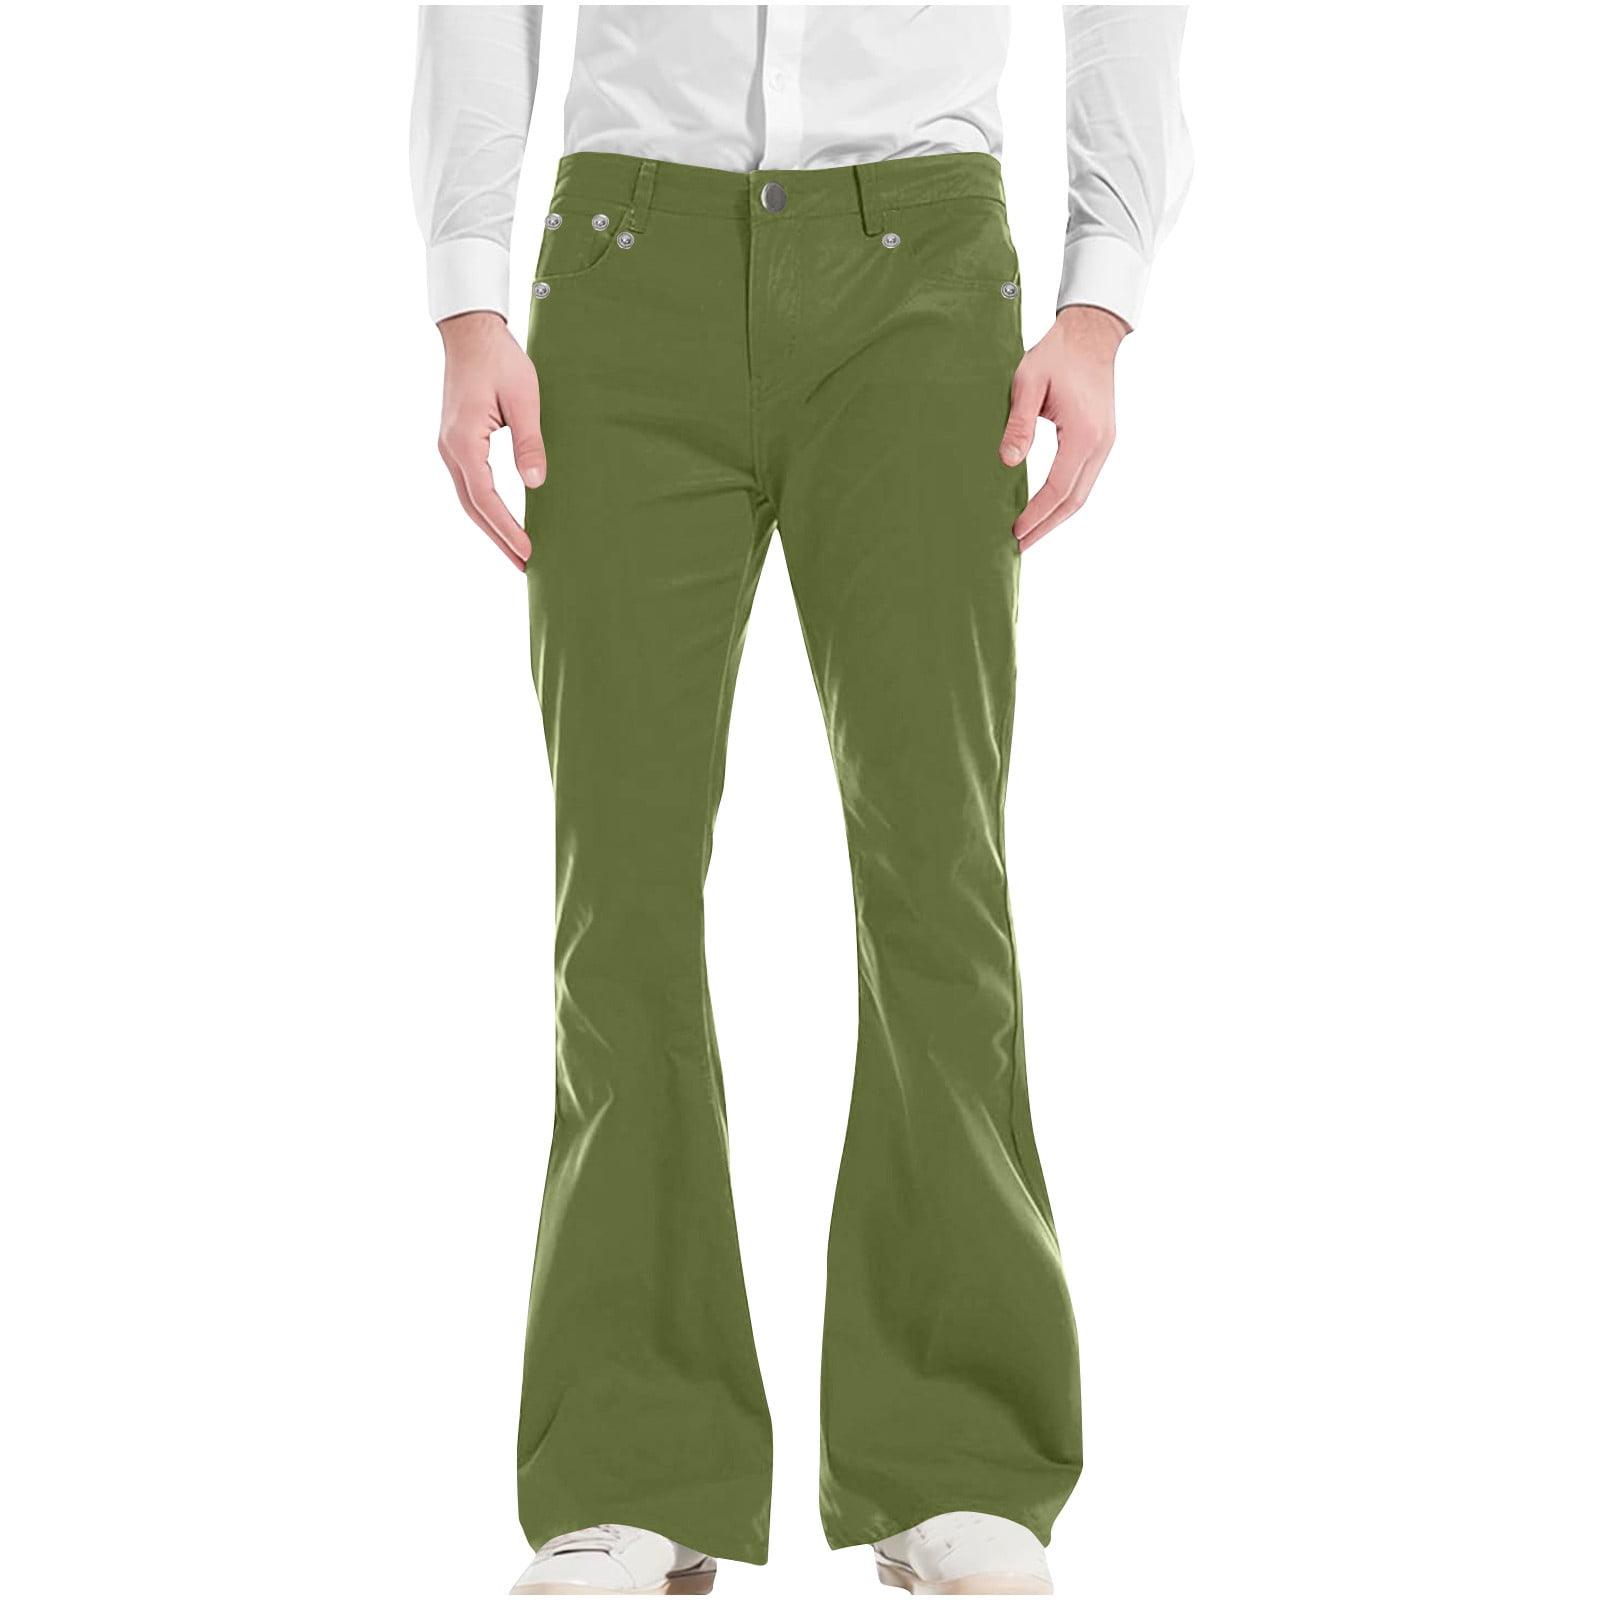 Bell bottom trouser with formal shirt. | Bell bottom trouser, Bell bottoms,  Formal shirts